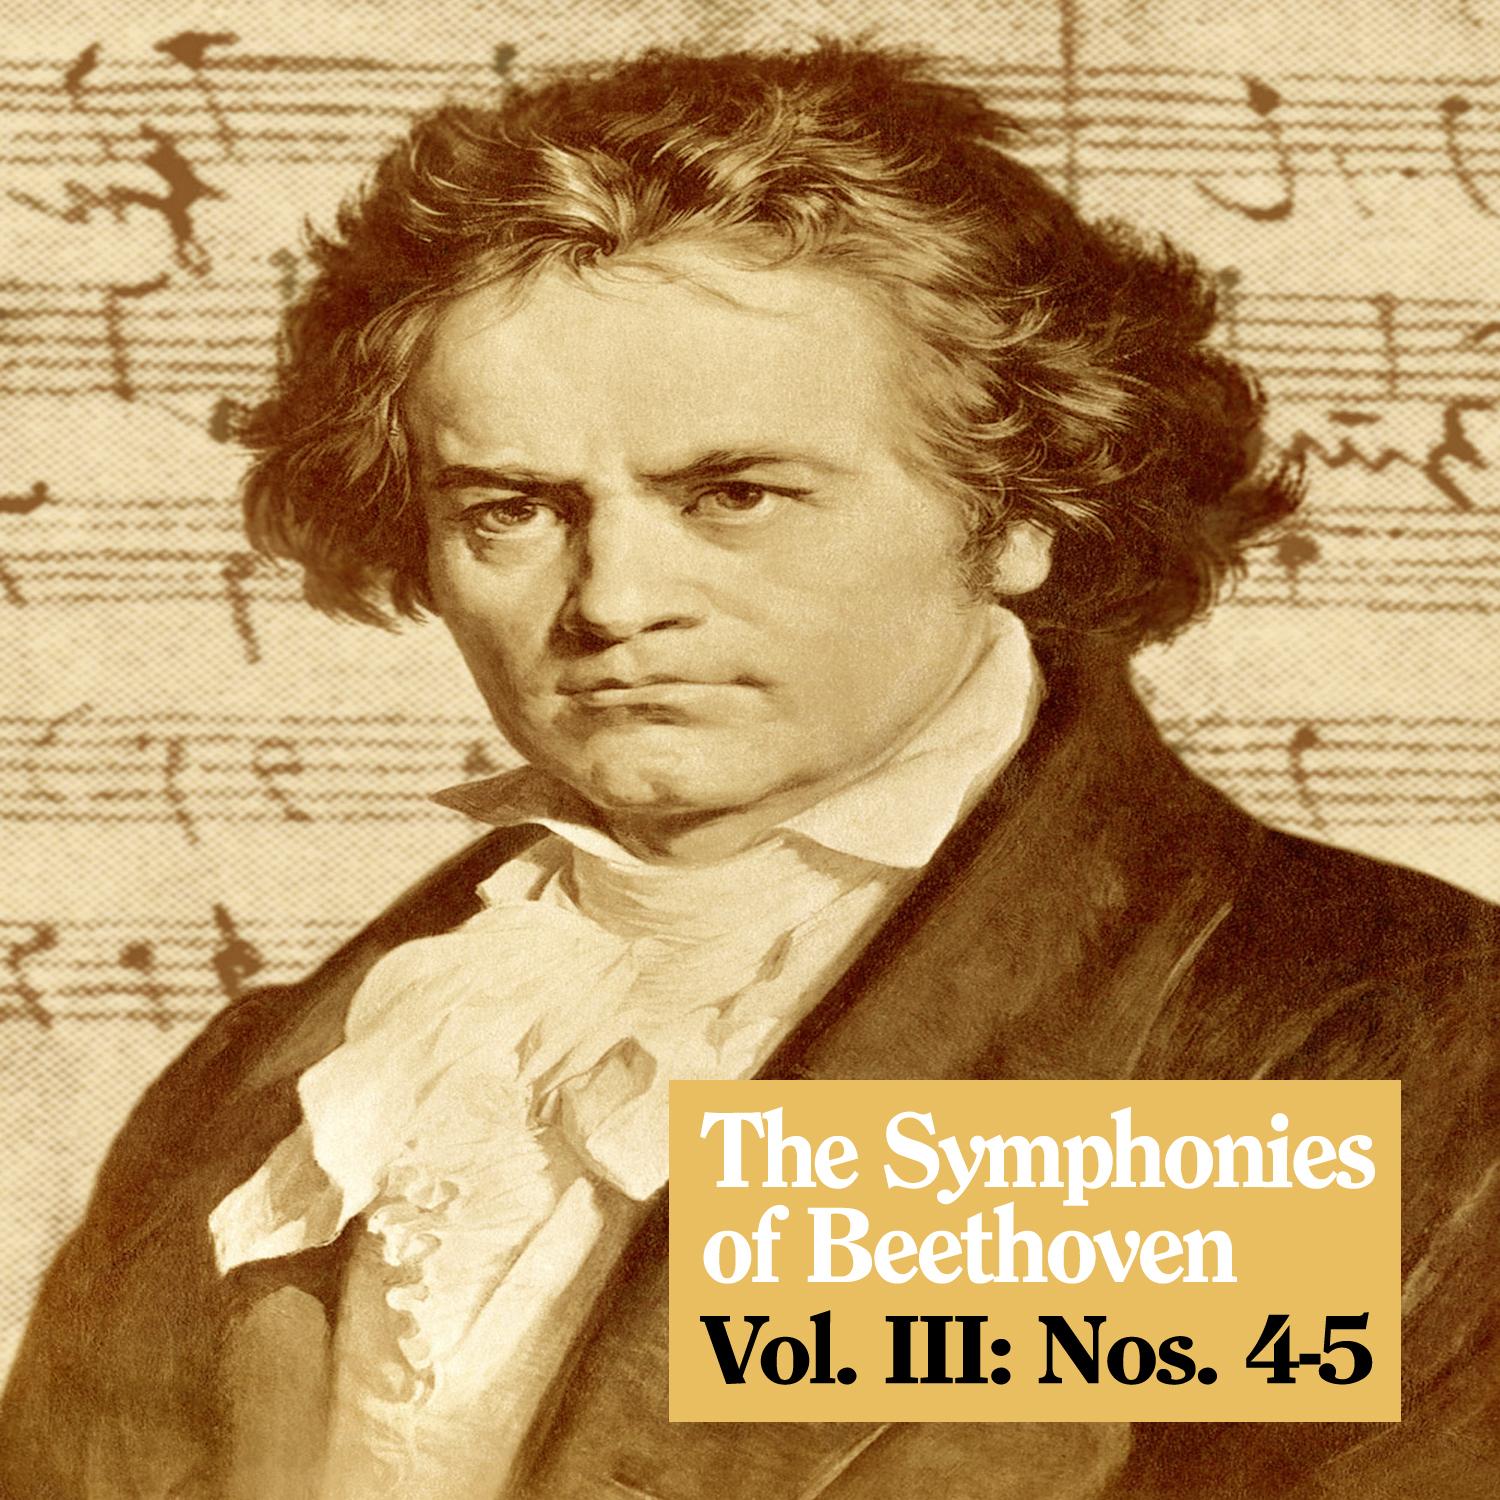 The Symphonies of Beethoven, Vol. III: Nos. 4-5